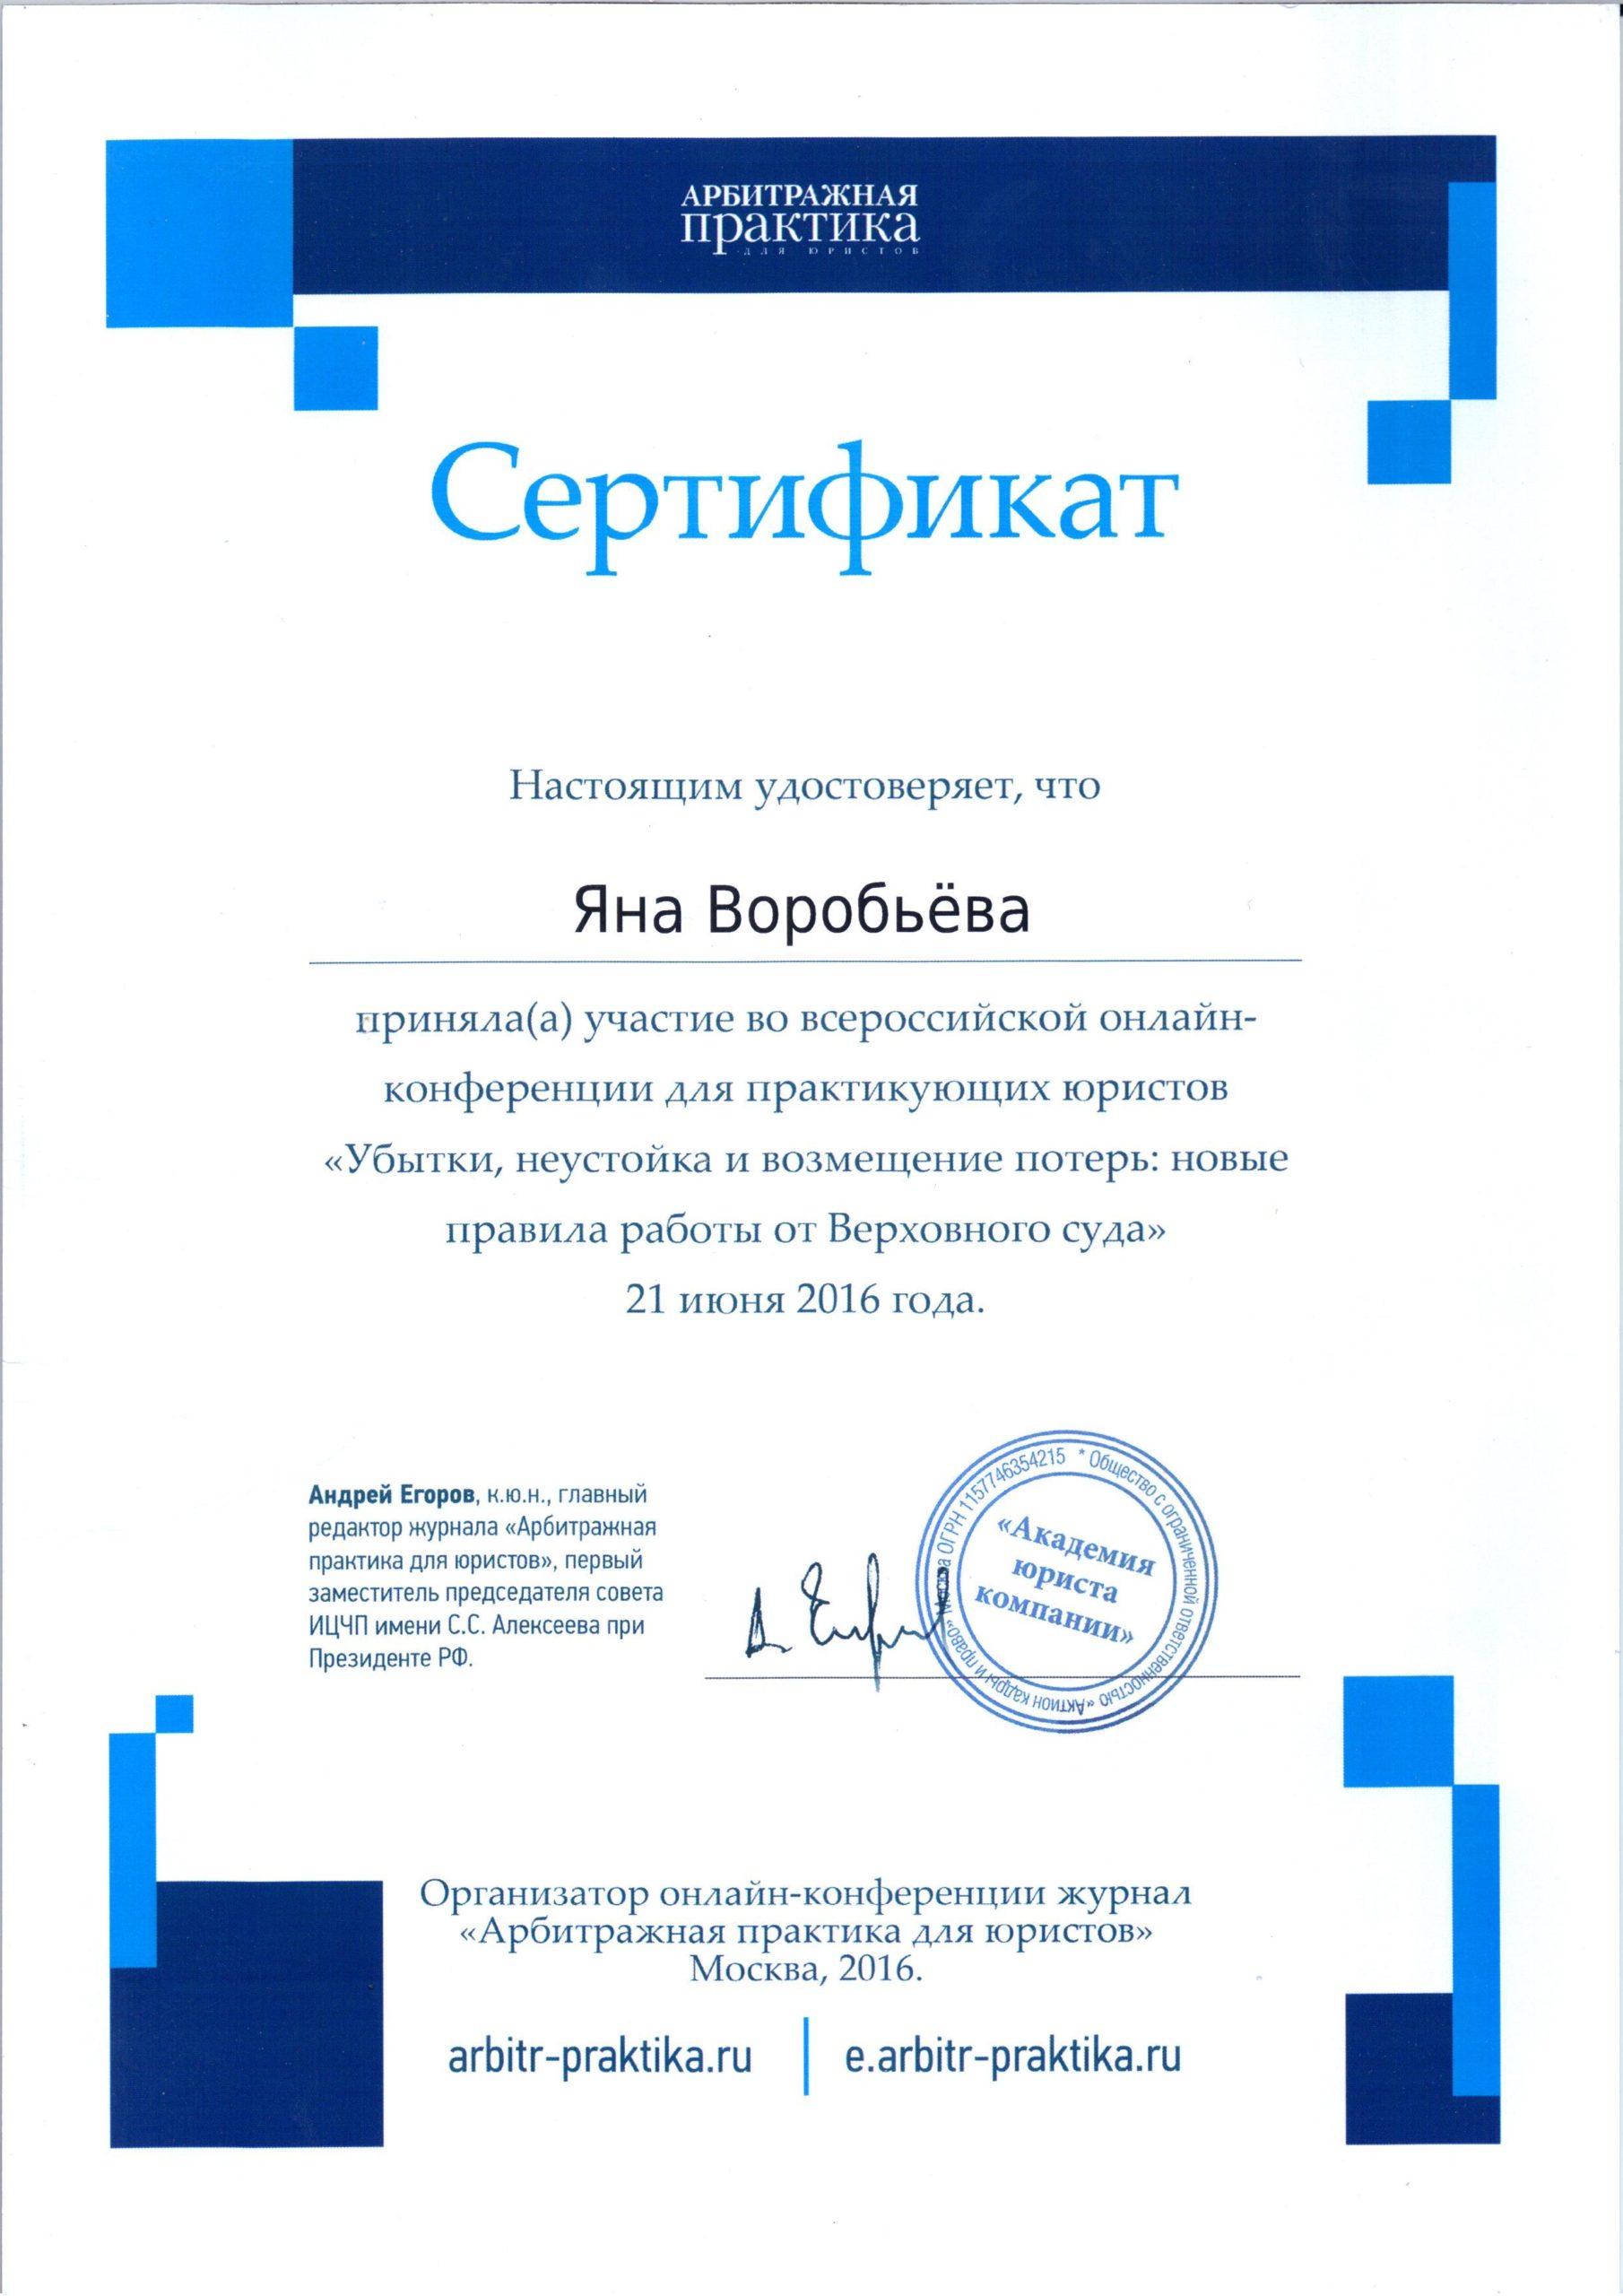 Сертификат Академия юриста компании